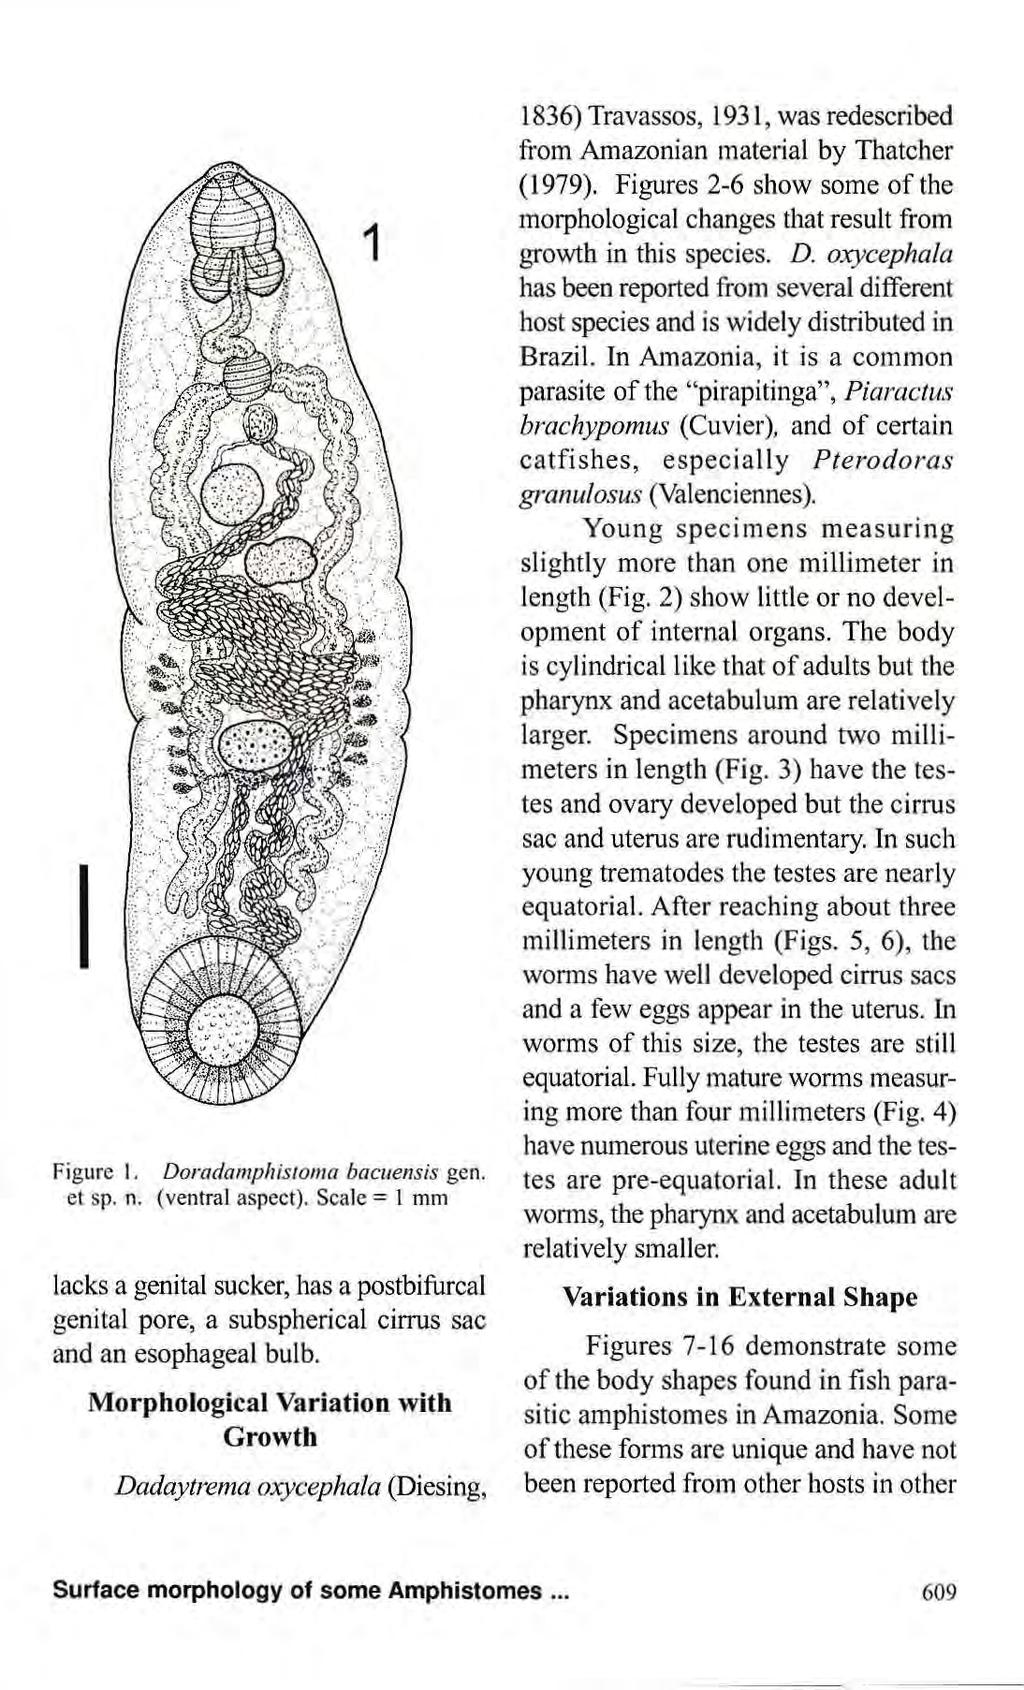 Figure 1. Doradamphistoma bacuensis gen. et sp. n. (ventral aspect). Scale = 1 mm lacks a genital sucker, has a postbifurcal genital pore, a subspherical cirrus sac and an esophageal bulb.